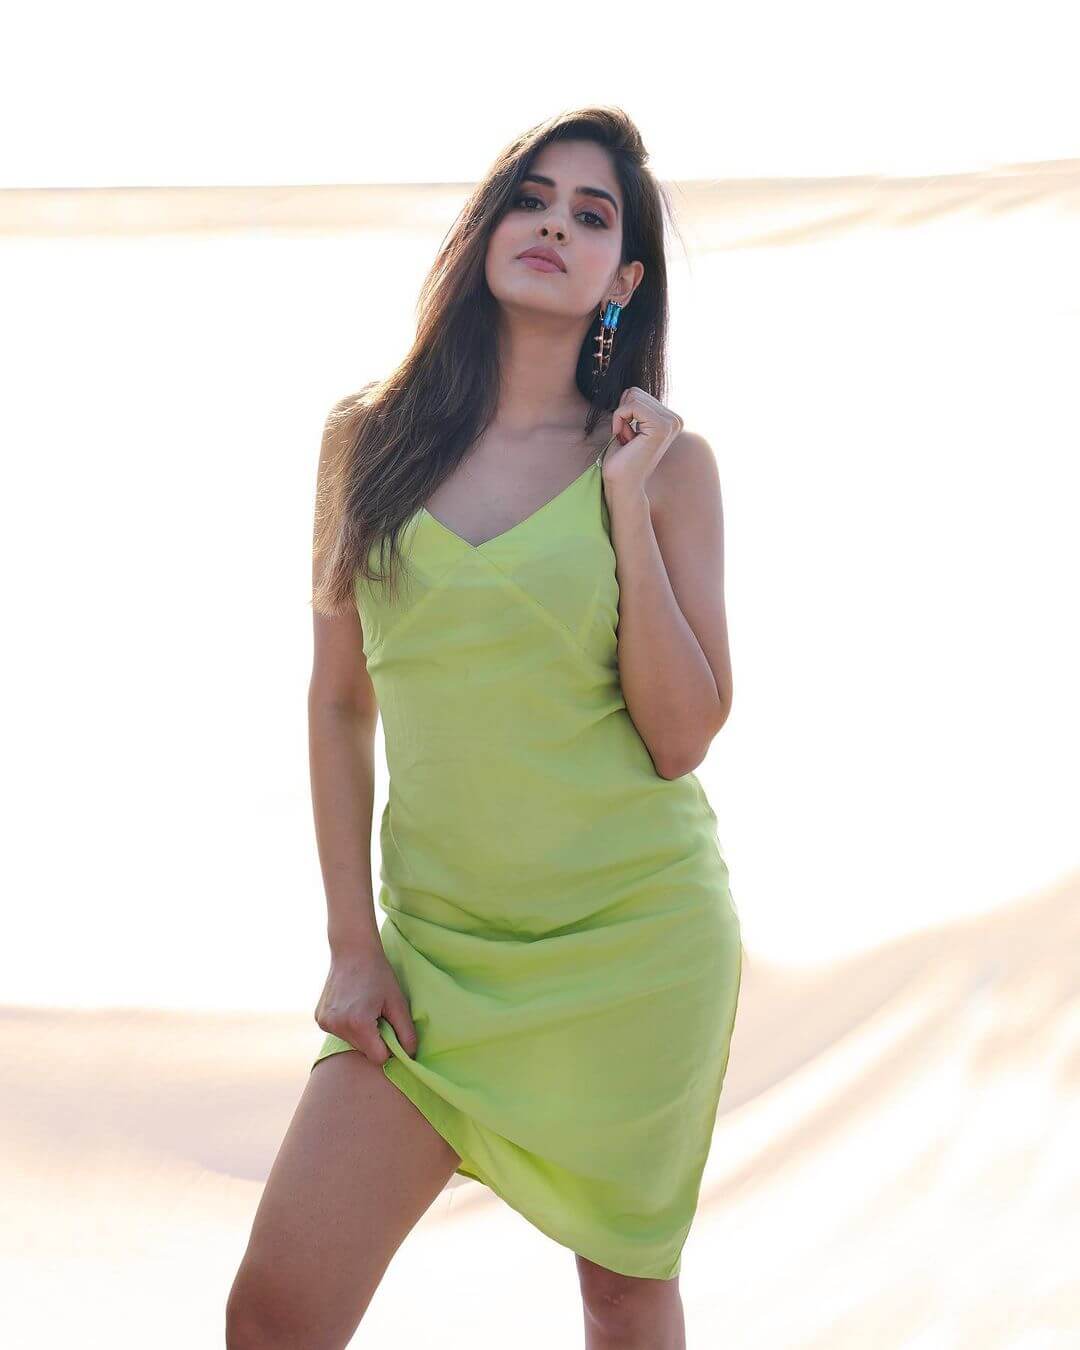 Sakshi Malikk Look Beautiful In Green Outfit Sakshi Malik Hot and Sexy Outfit Look